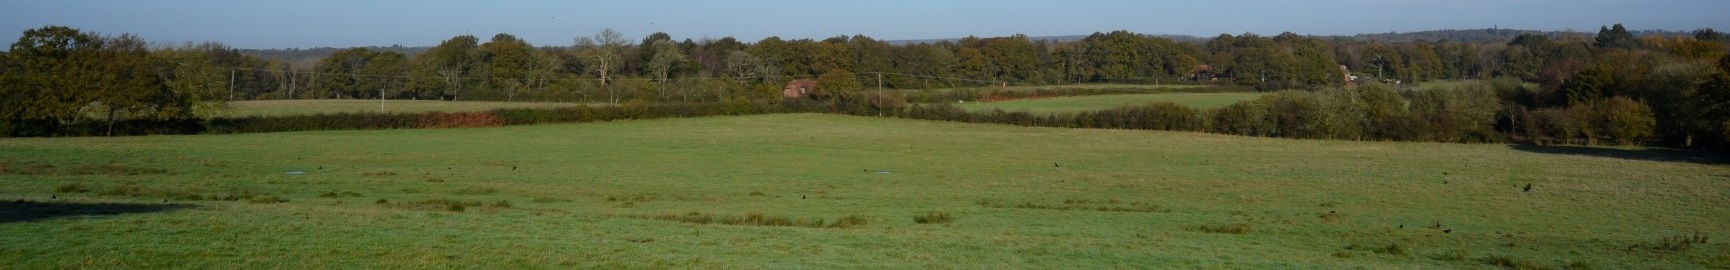 Ampfield Heritage Area